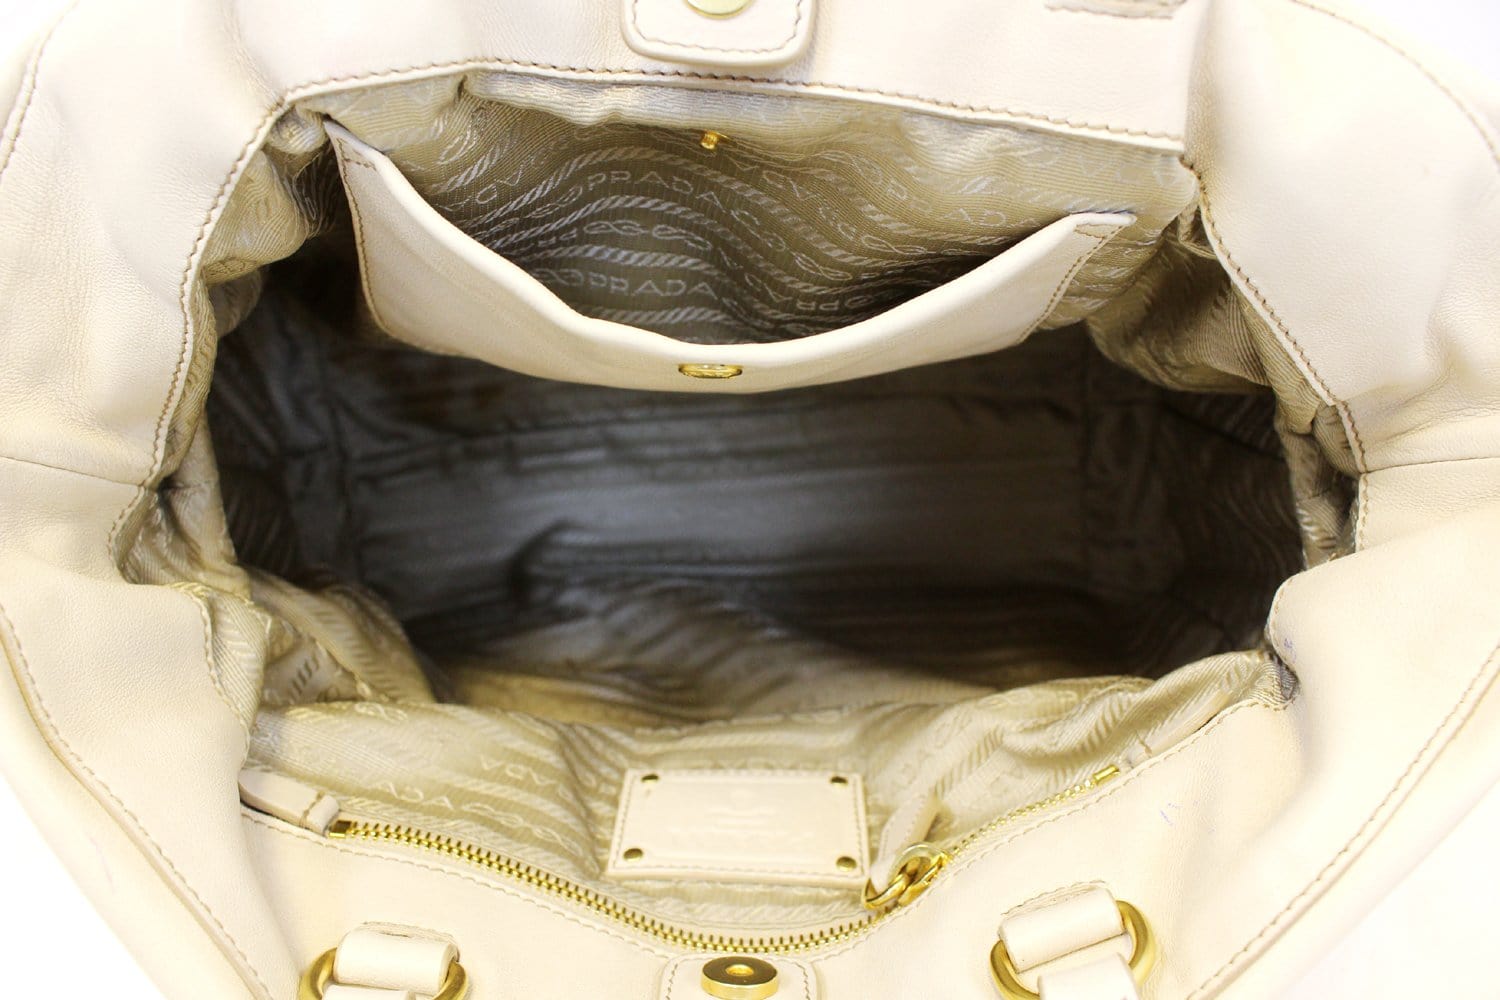 Prada Nappa Frills Shopping Beige Leather Tote Bag